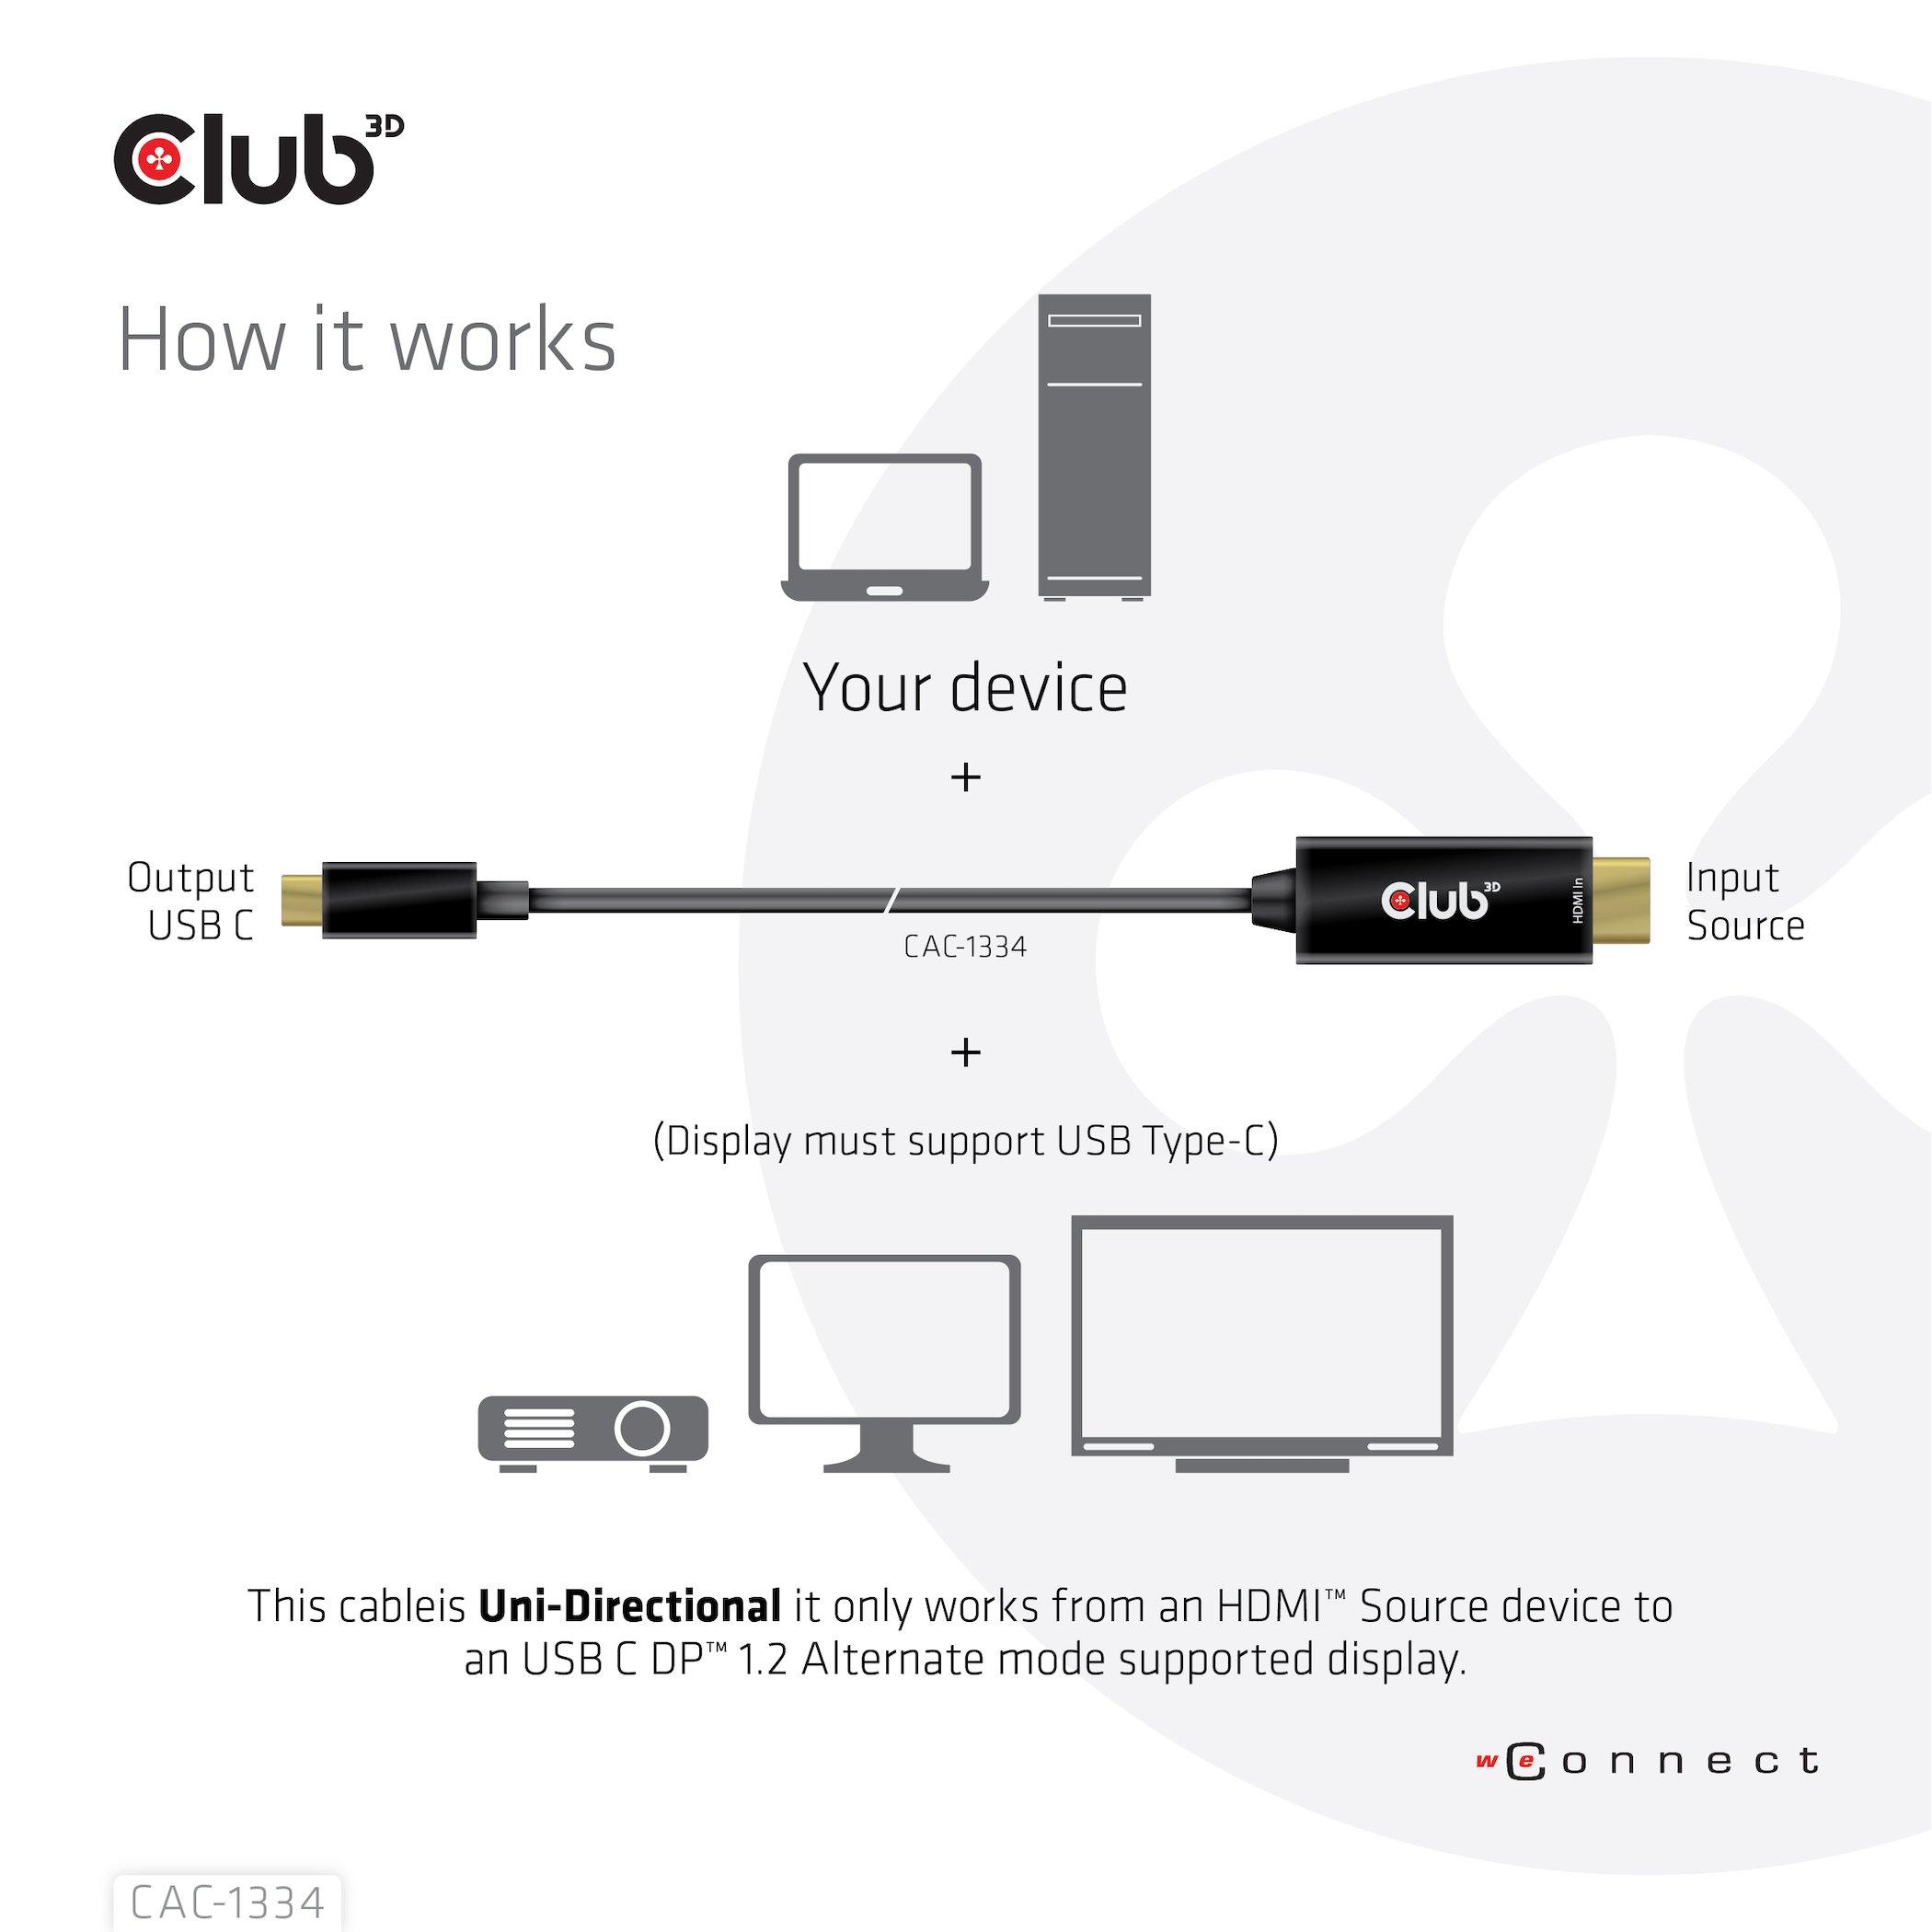 Club3D  CLUB3D HDMI to USB Type-C 4K60Hz Active Cable M/M 1.8m/6 ft 